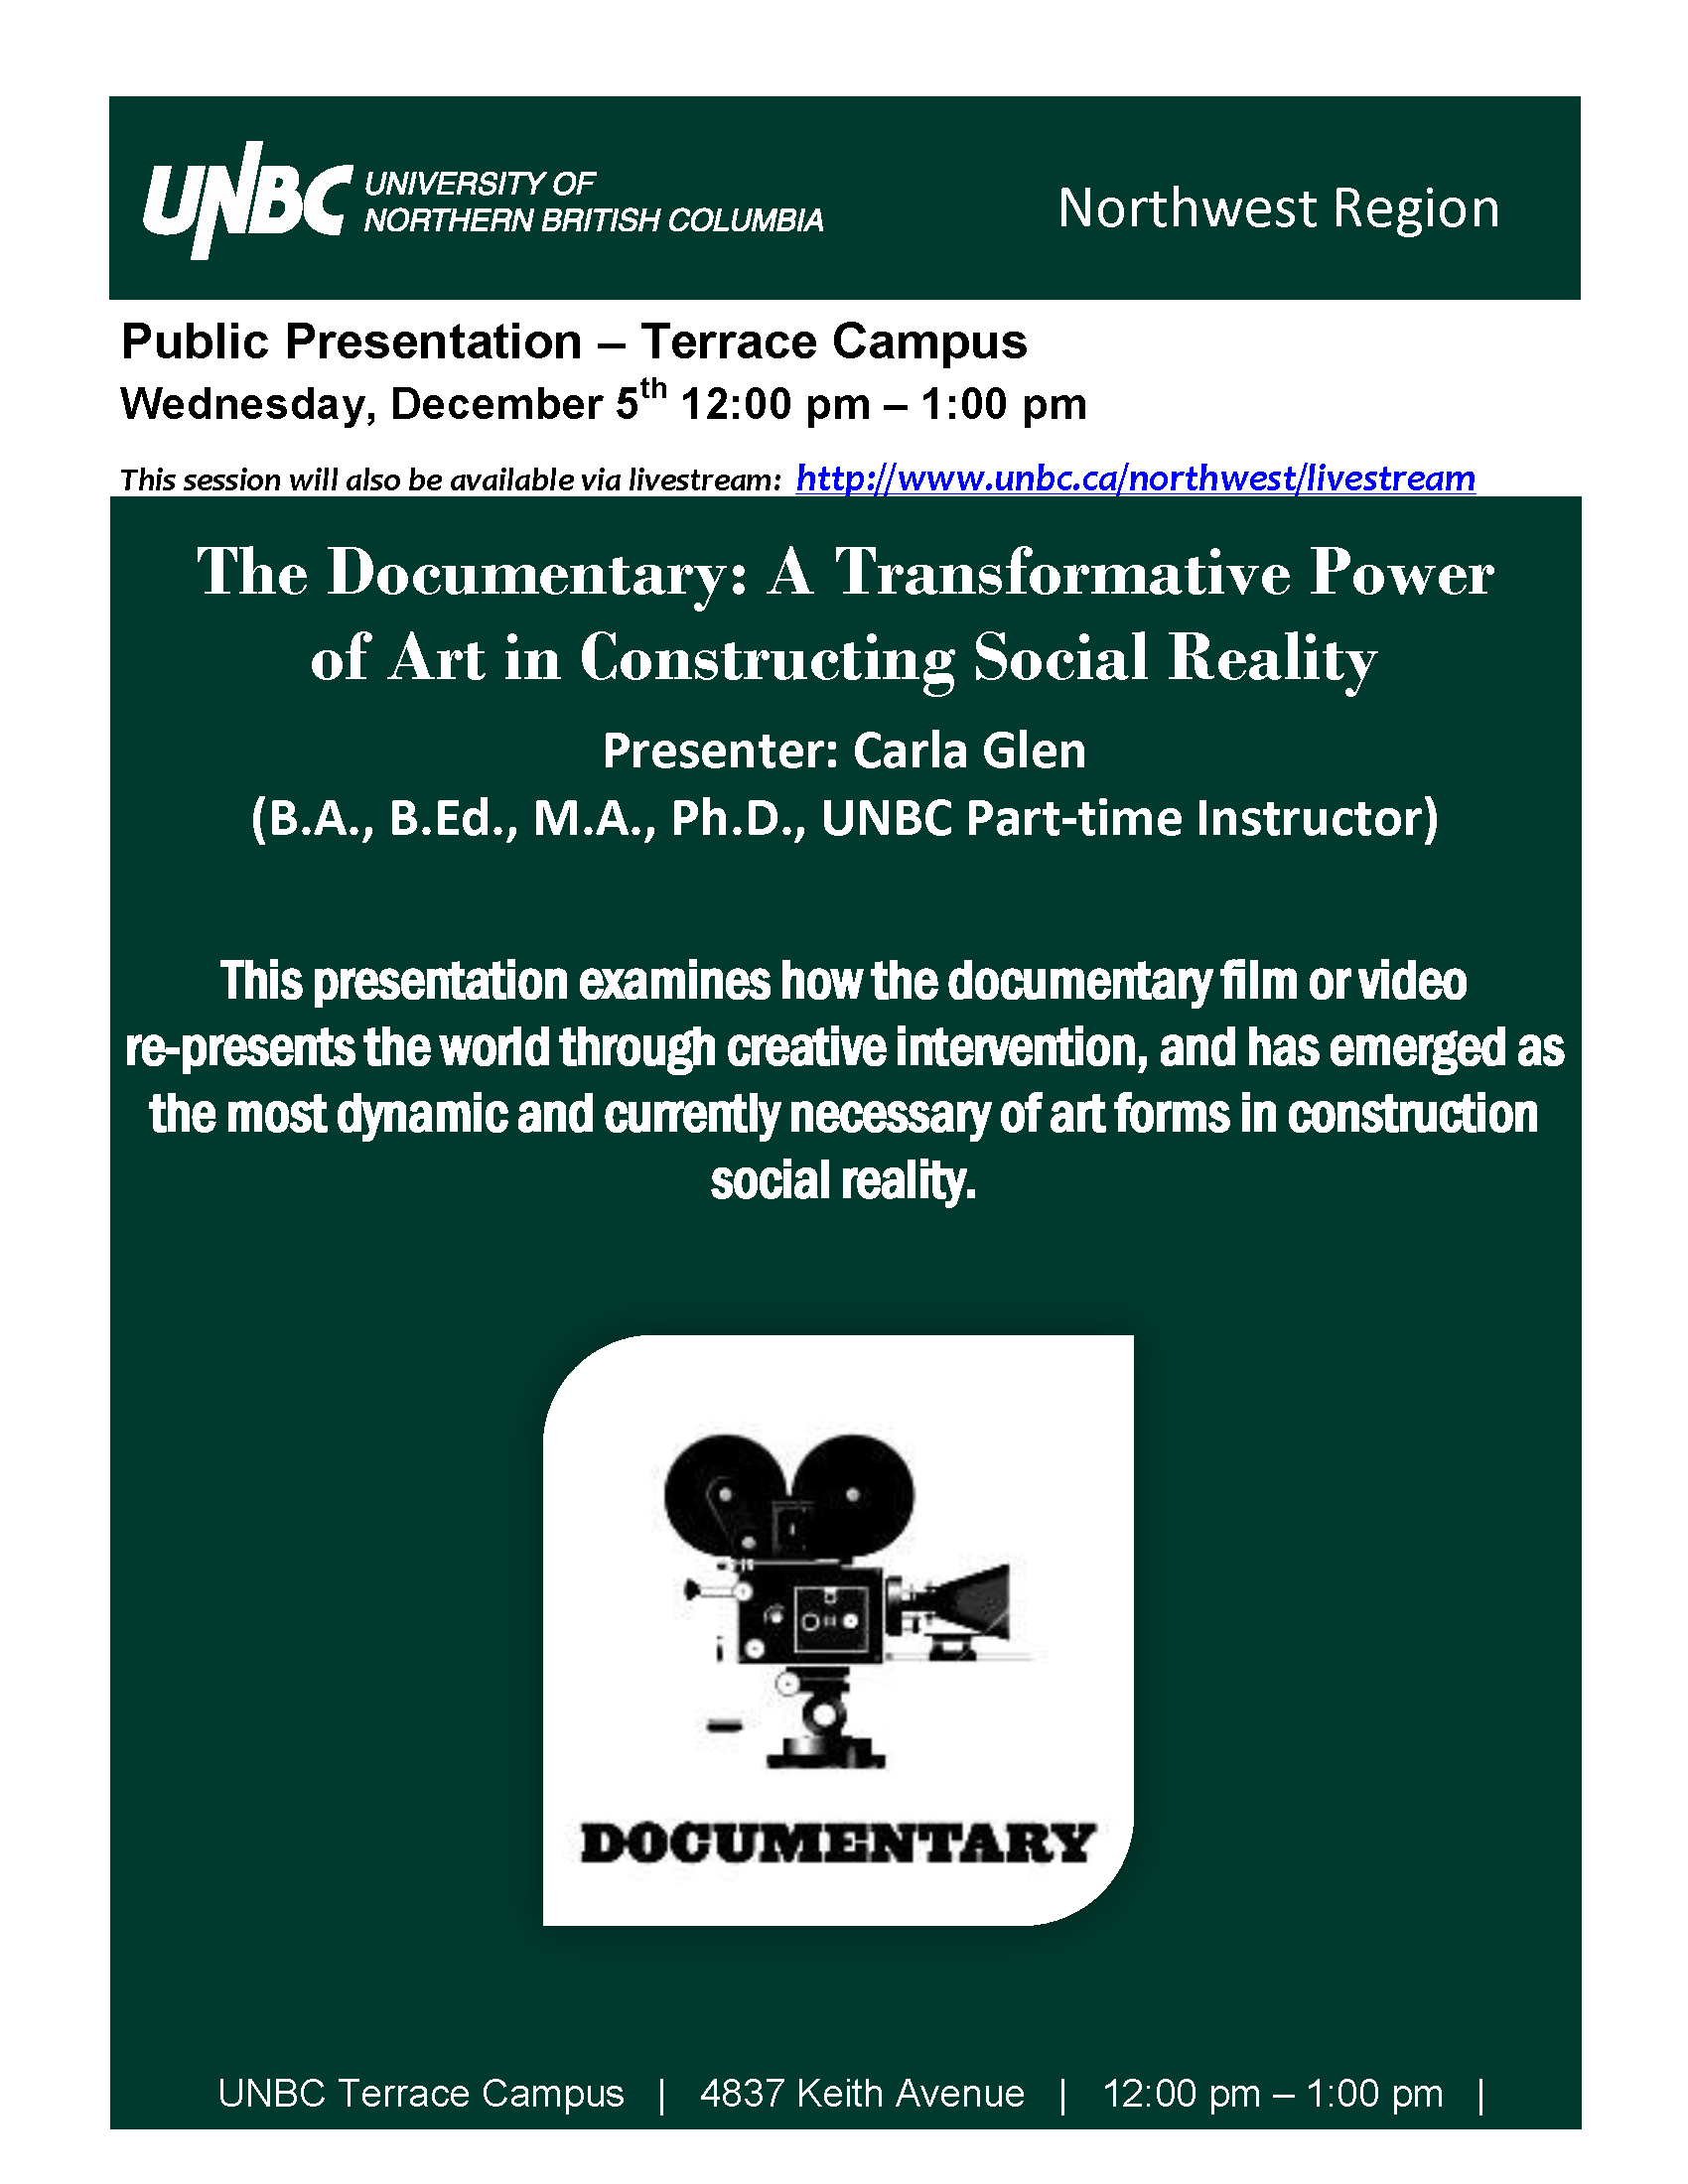 UNBC Northwest Public Presentation (12/5): Dr. Carla Glen - The Documentary: A Transformative Power of Art in Constructing Social Reality